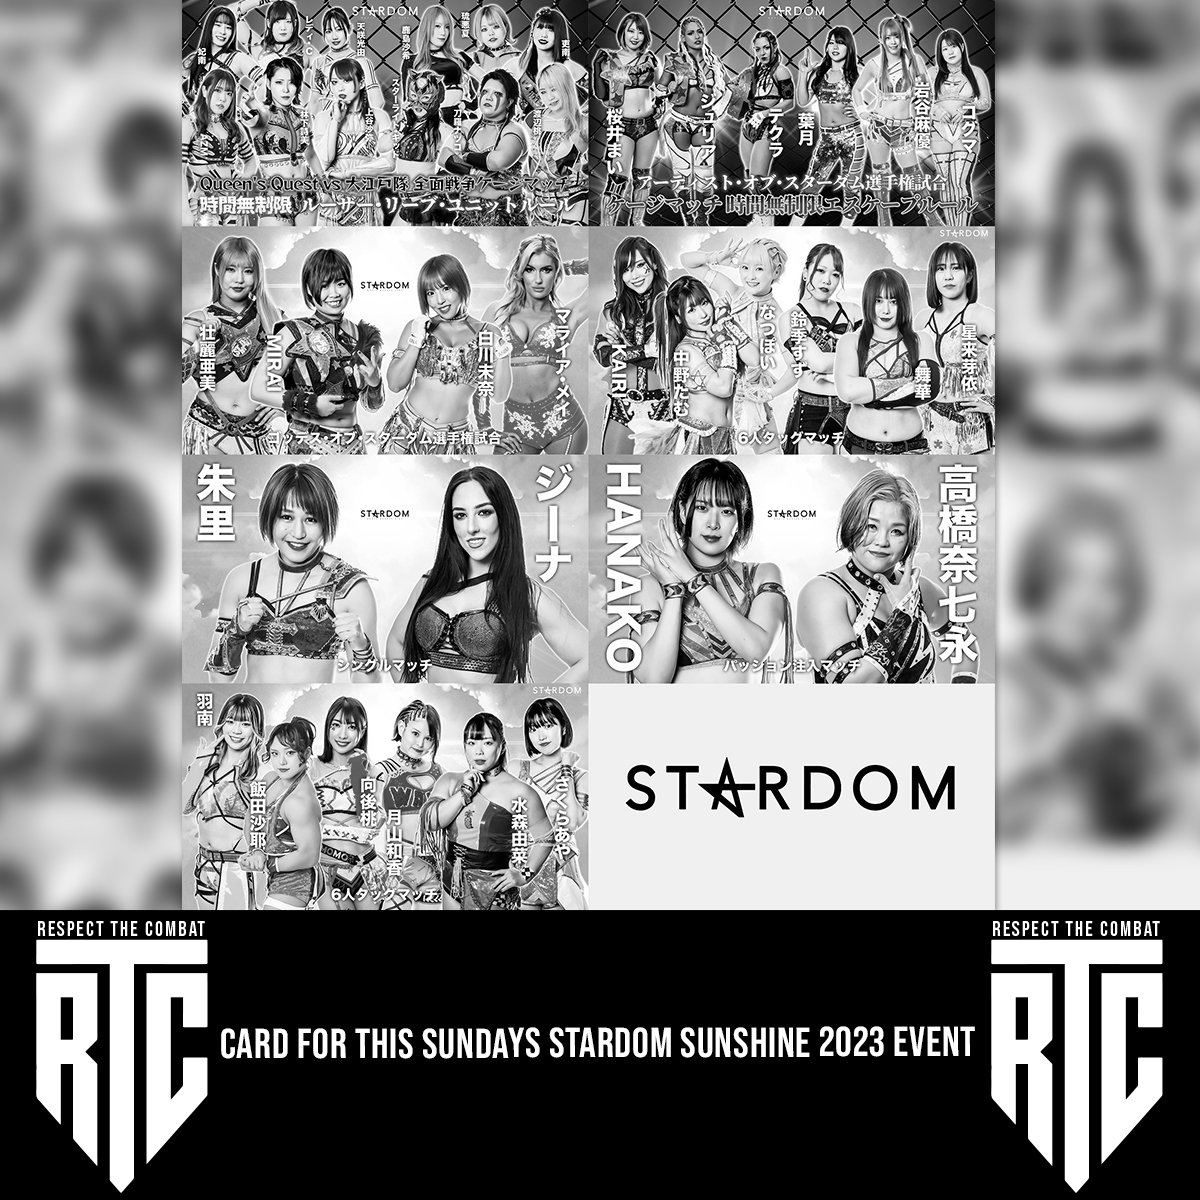 Stardom Sunshine 2023 Card

#stardom #stardomwrestling #japanesewrestling #womenswrestling #womenssports #wrestling #prowrestling #wrestlingnews